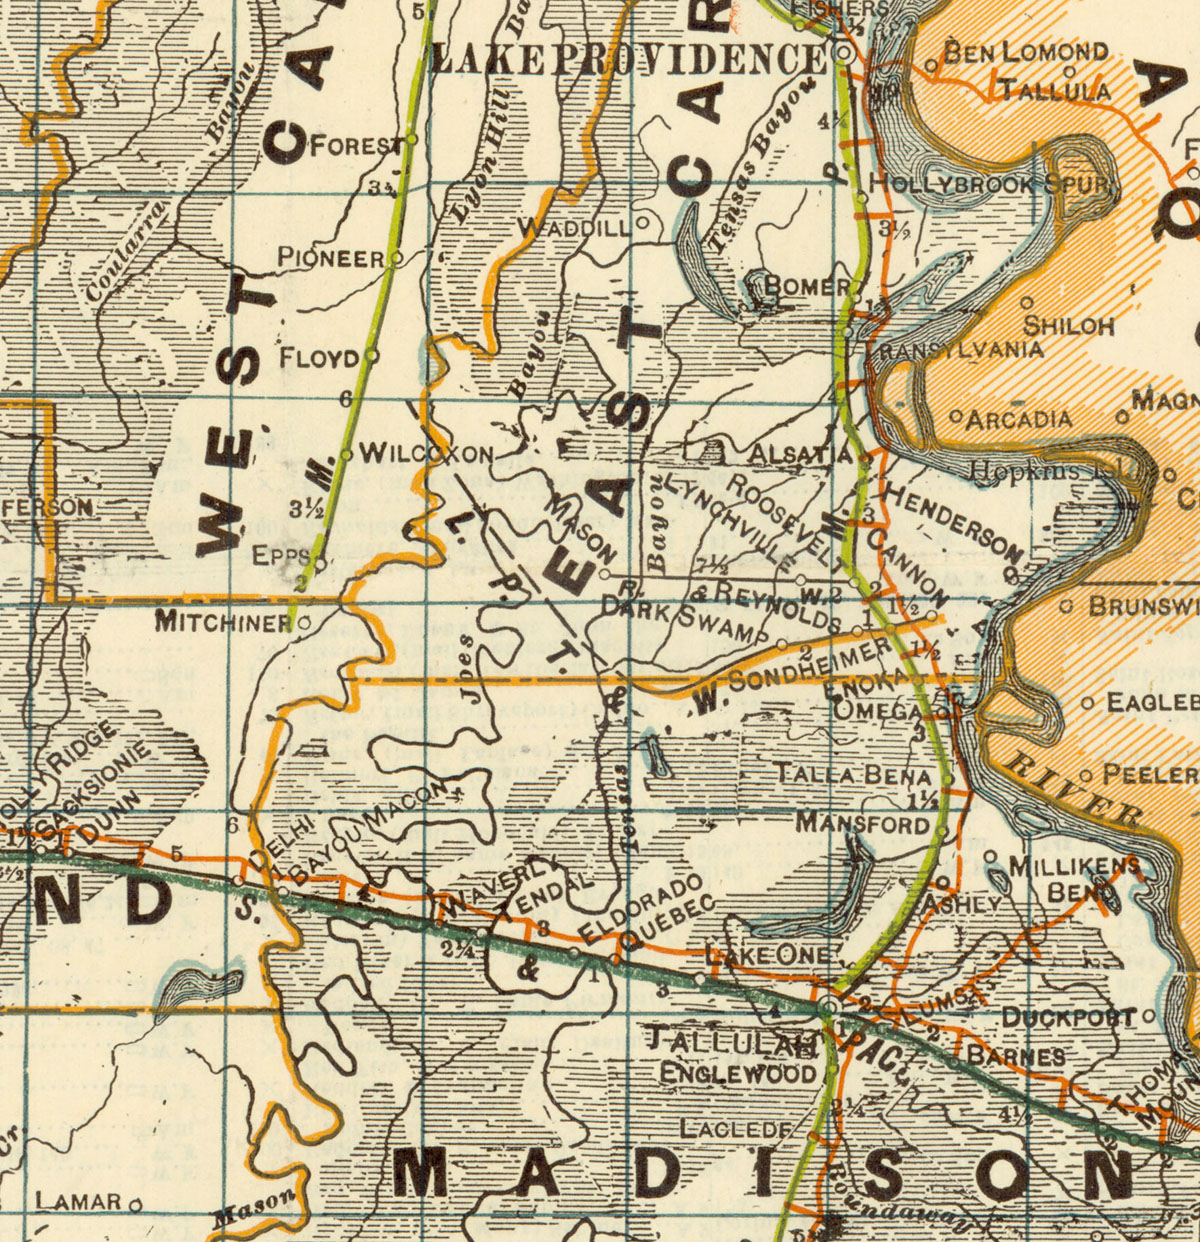 Lake Providence, Texarkana & Western Railroad Company (La.), Map Showing Route in 1922.